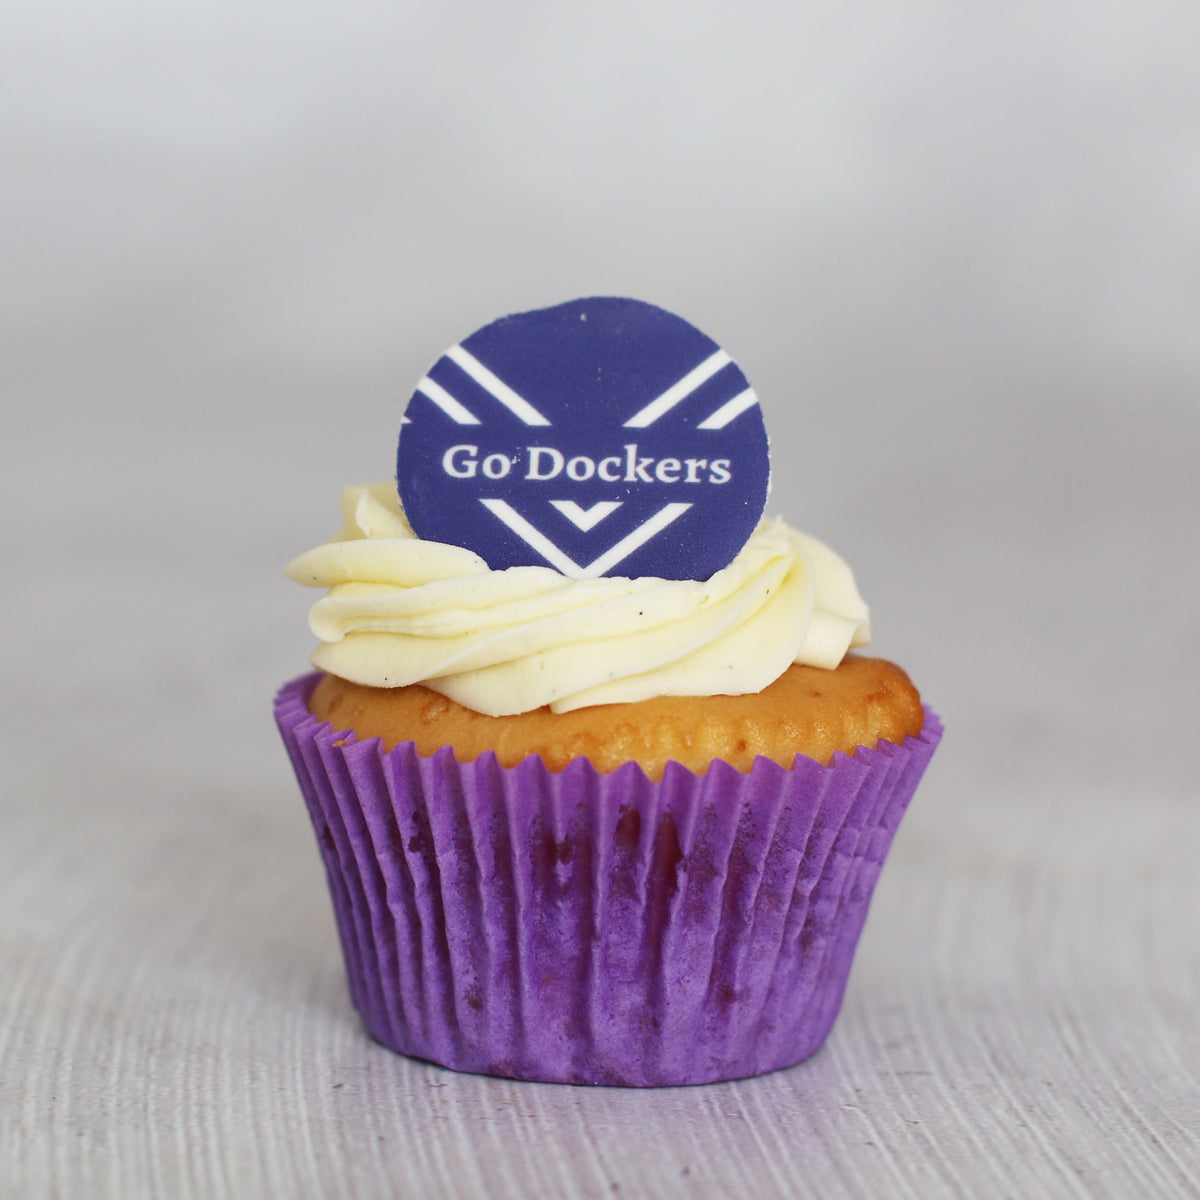 Go Dockers - Football Cupcakes Cupcakes The Cupcake Queens 